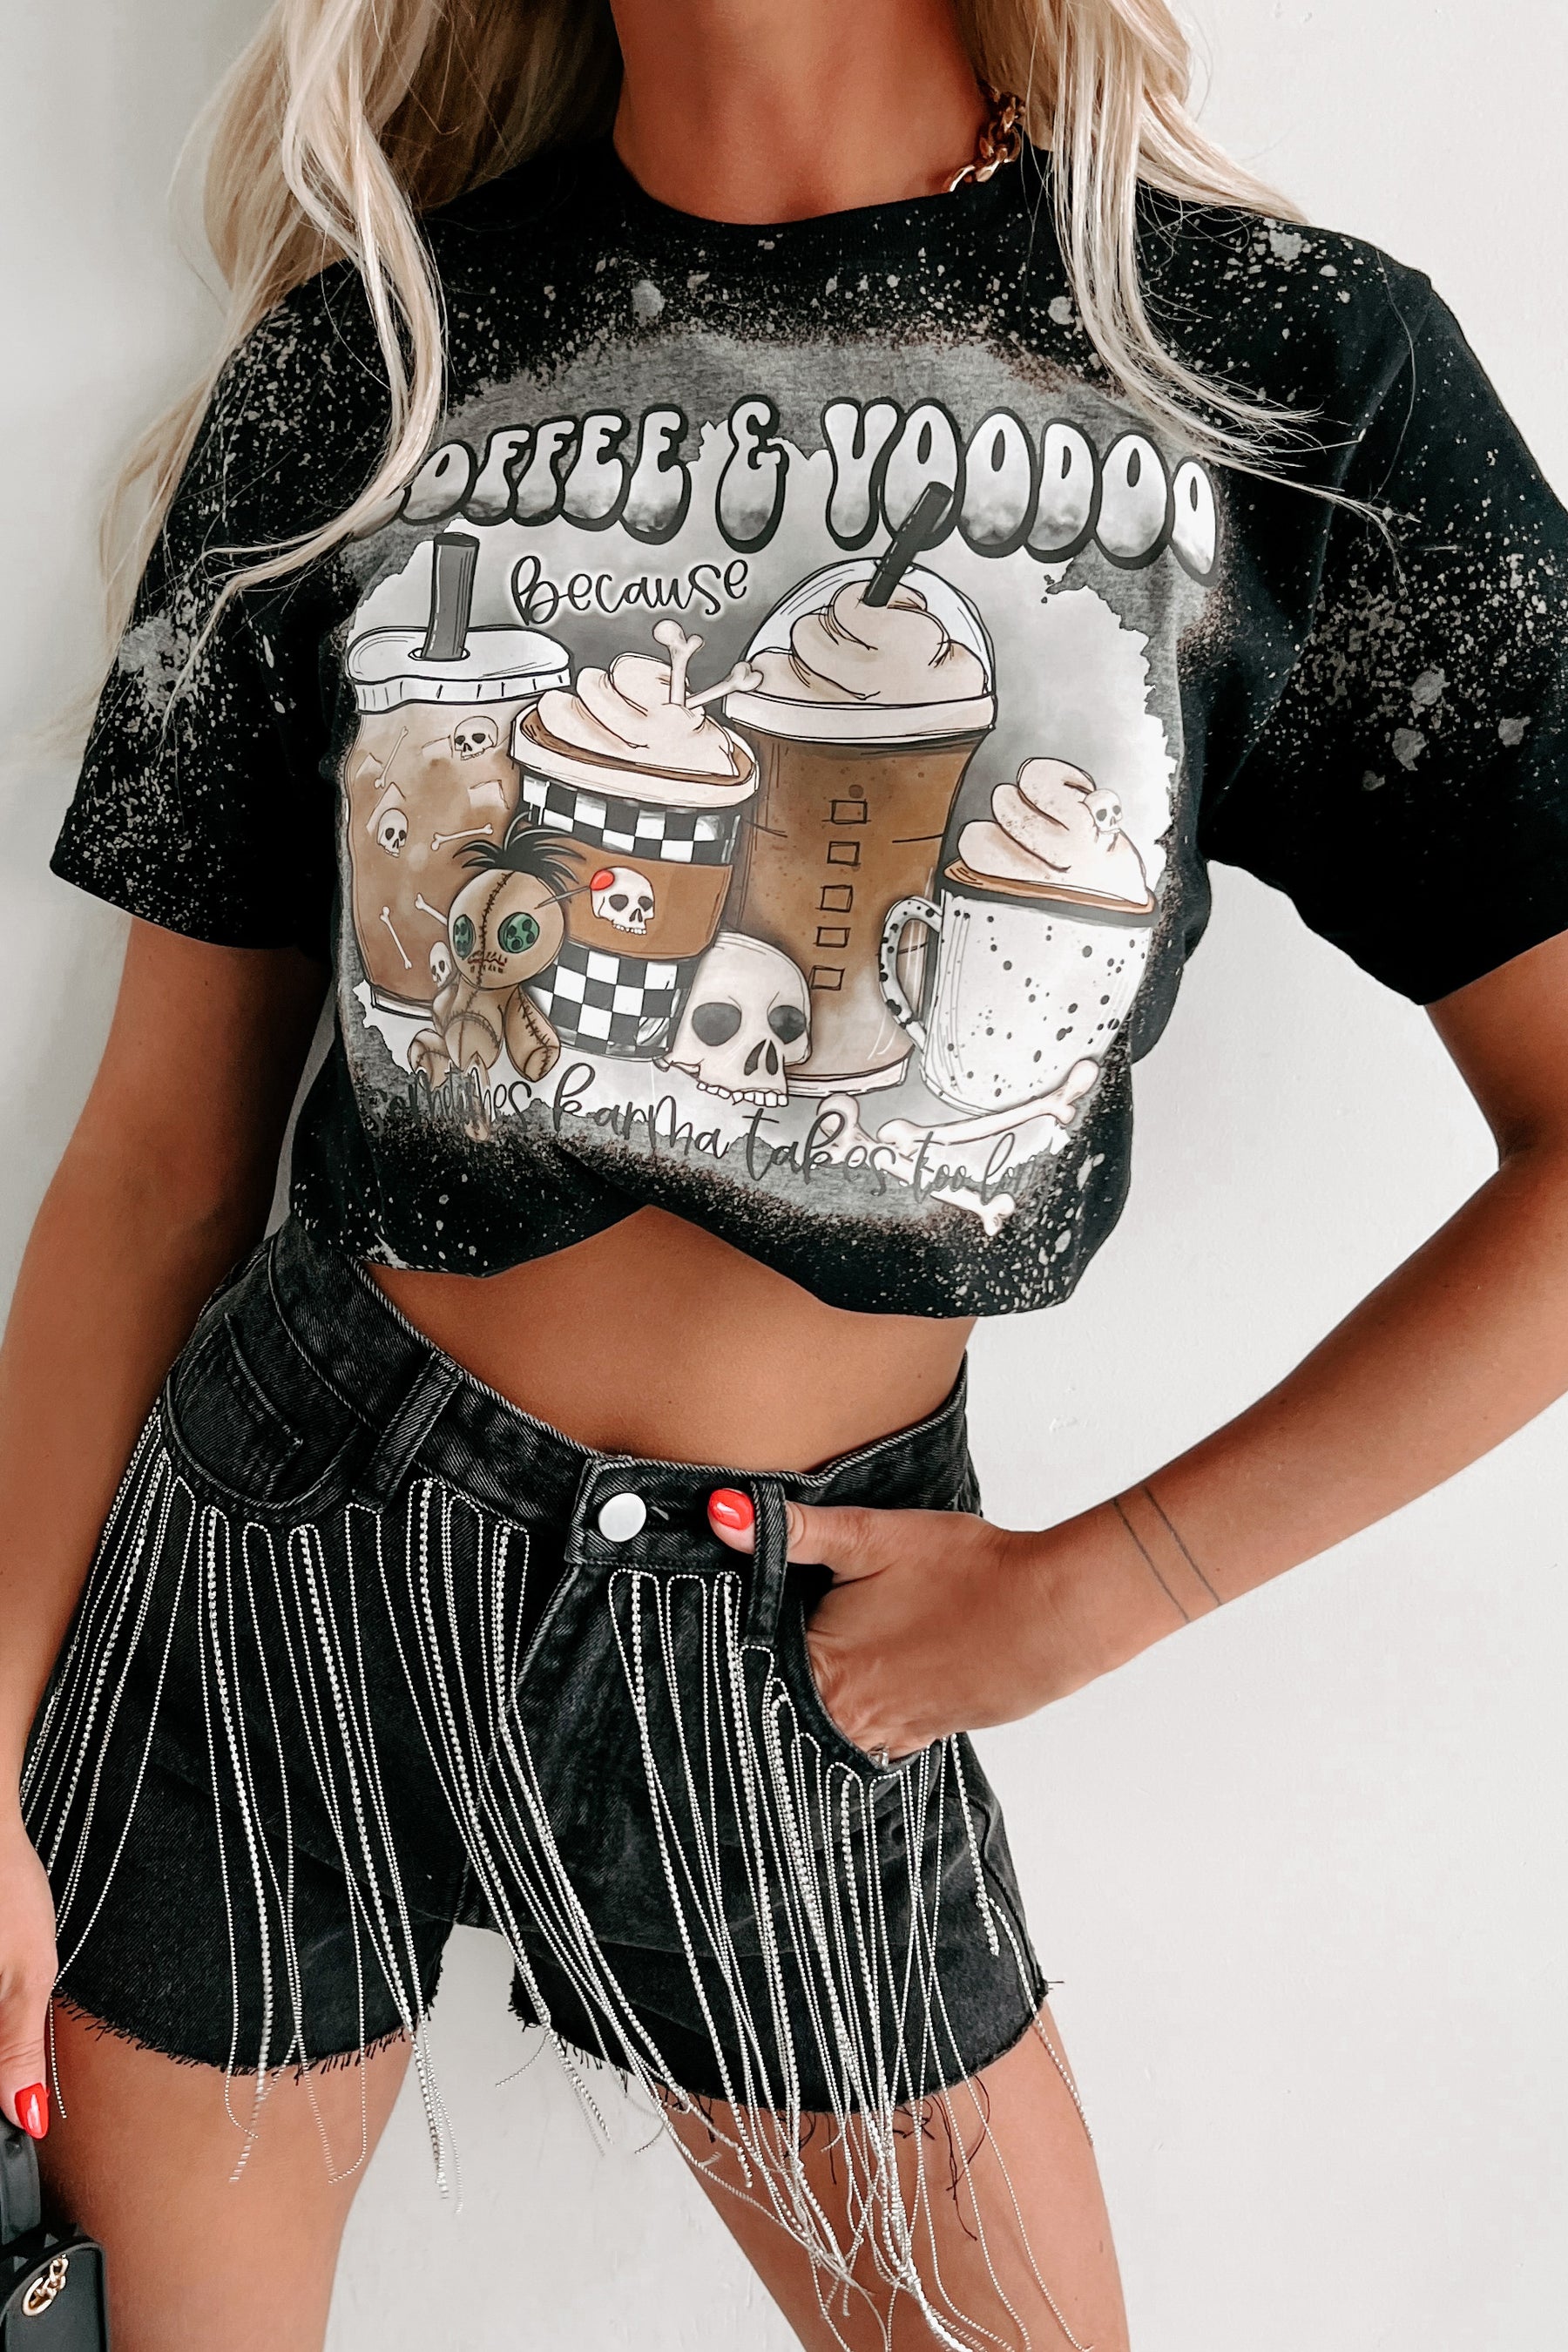 Doorbuster "Coffee & Voodoo" Bleached Graphic T-Shirt (Black) - Print On Demand - NanaMacs